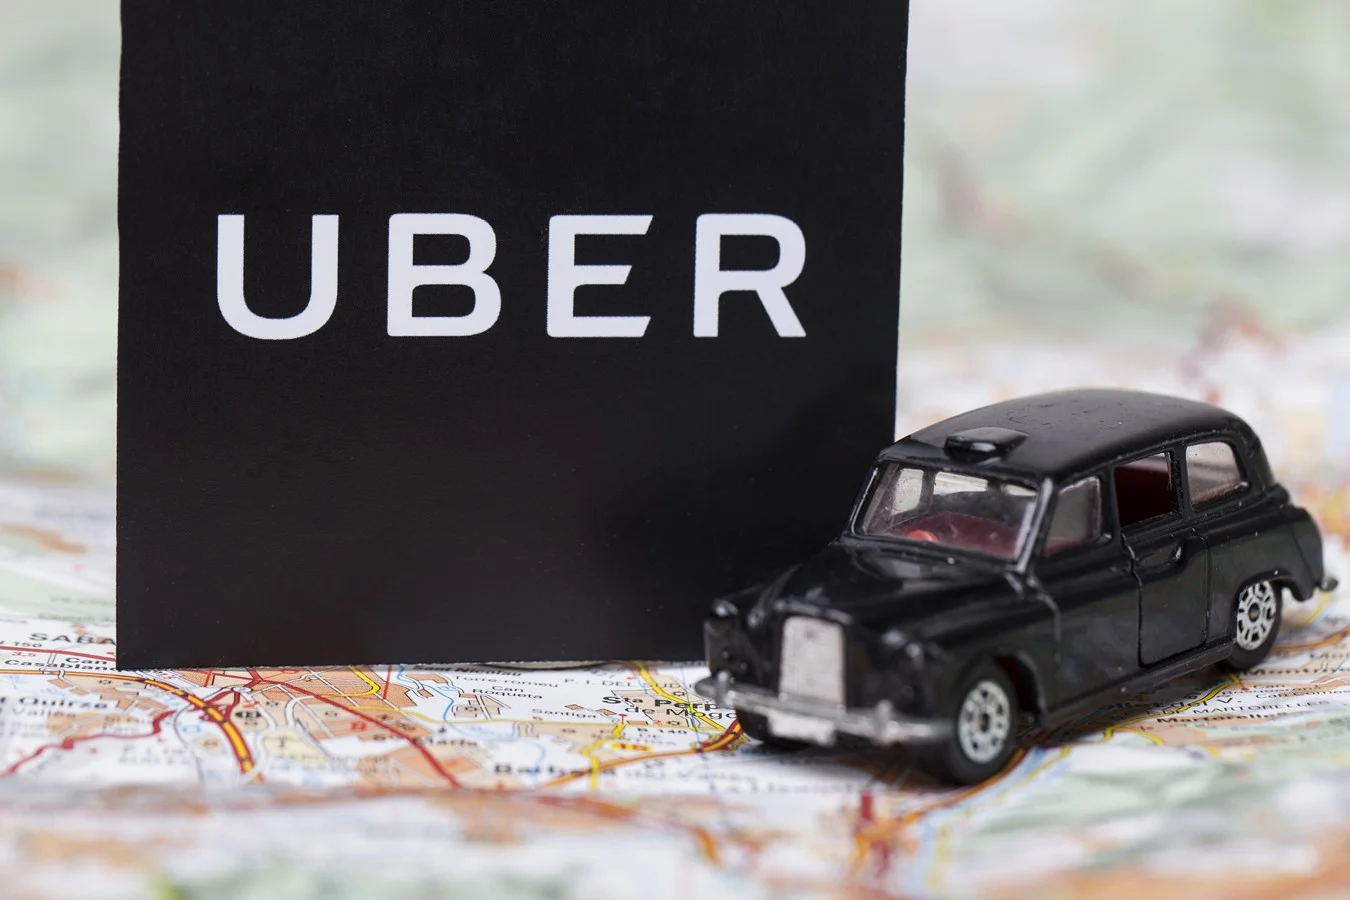 Uber London Black Cab 01